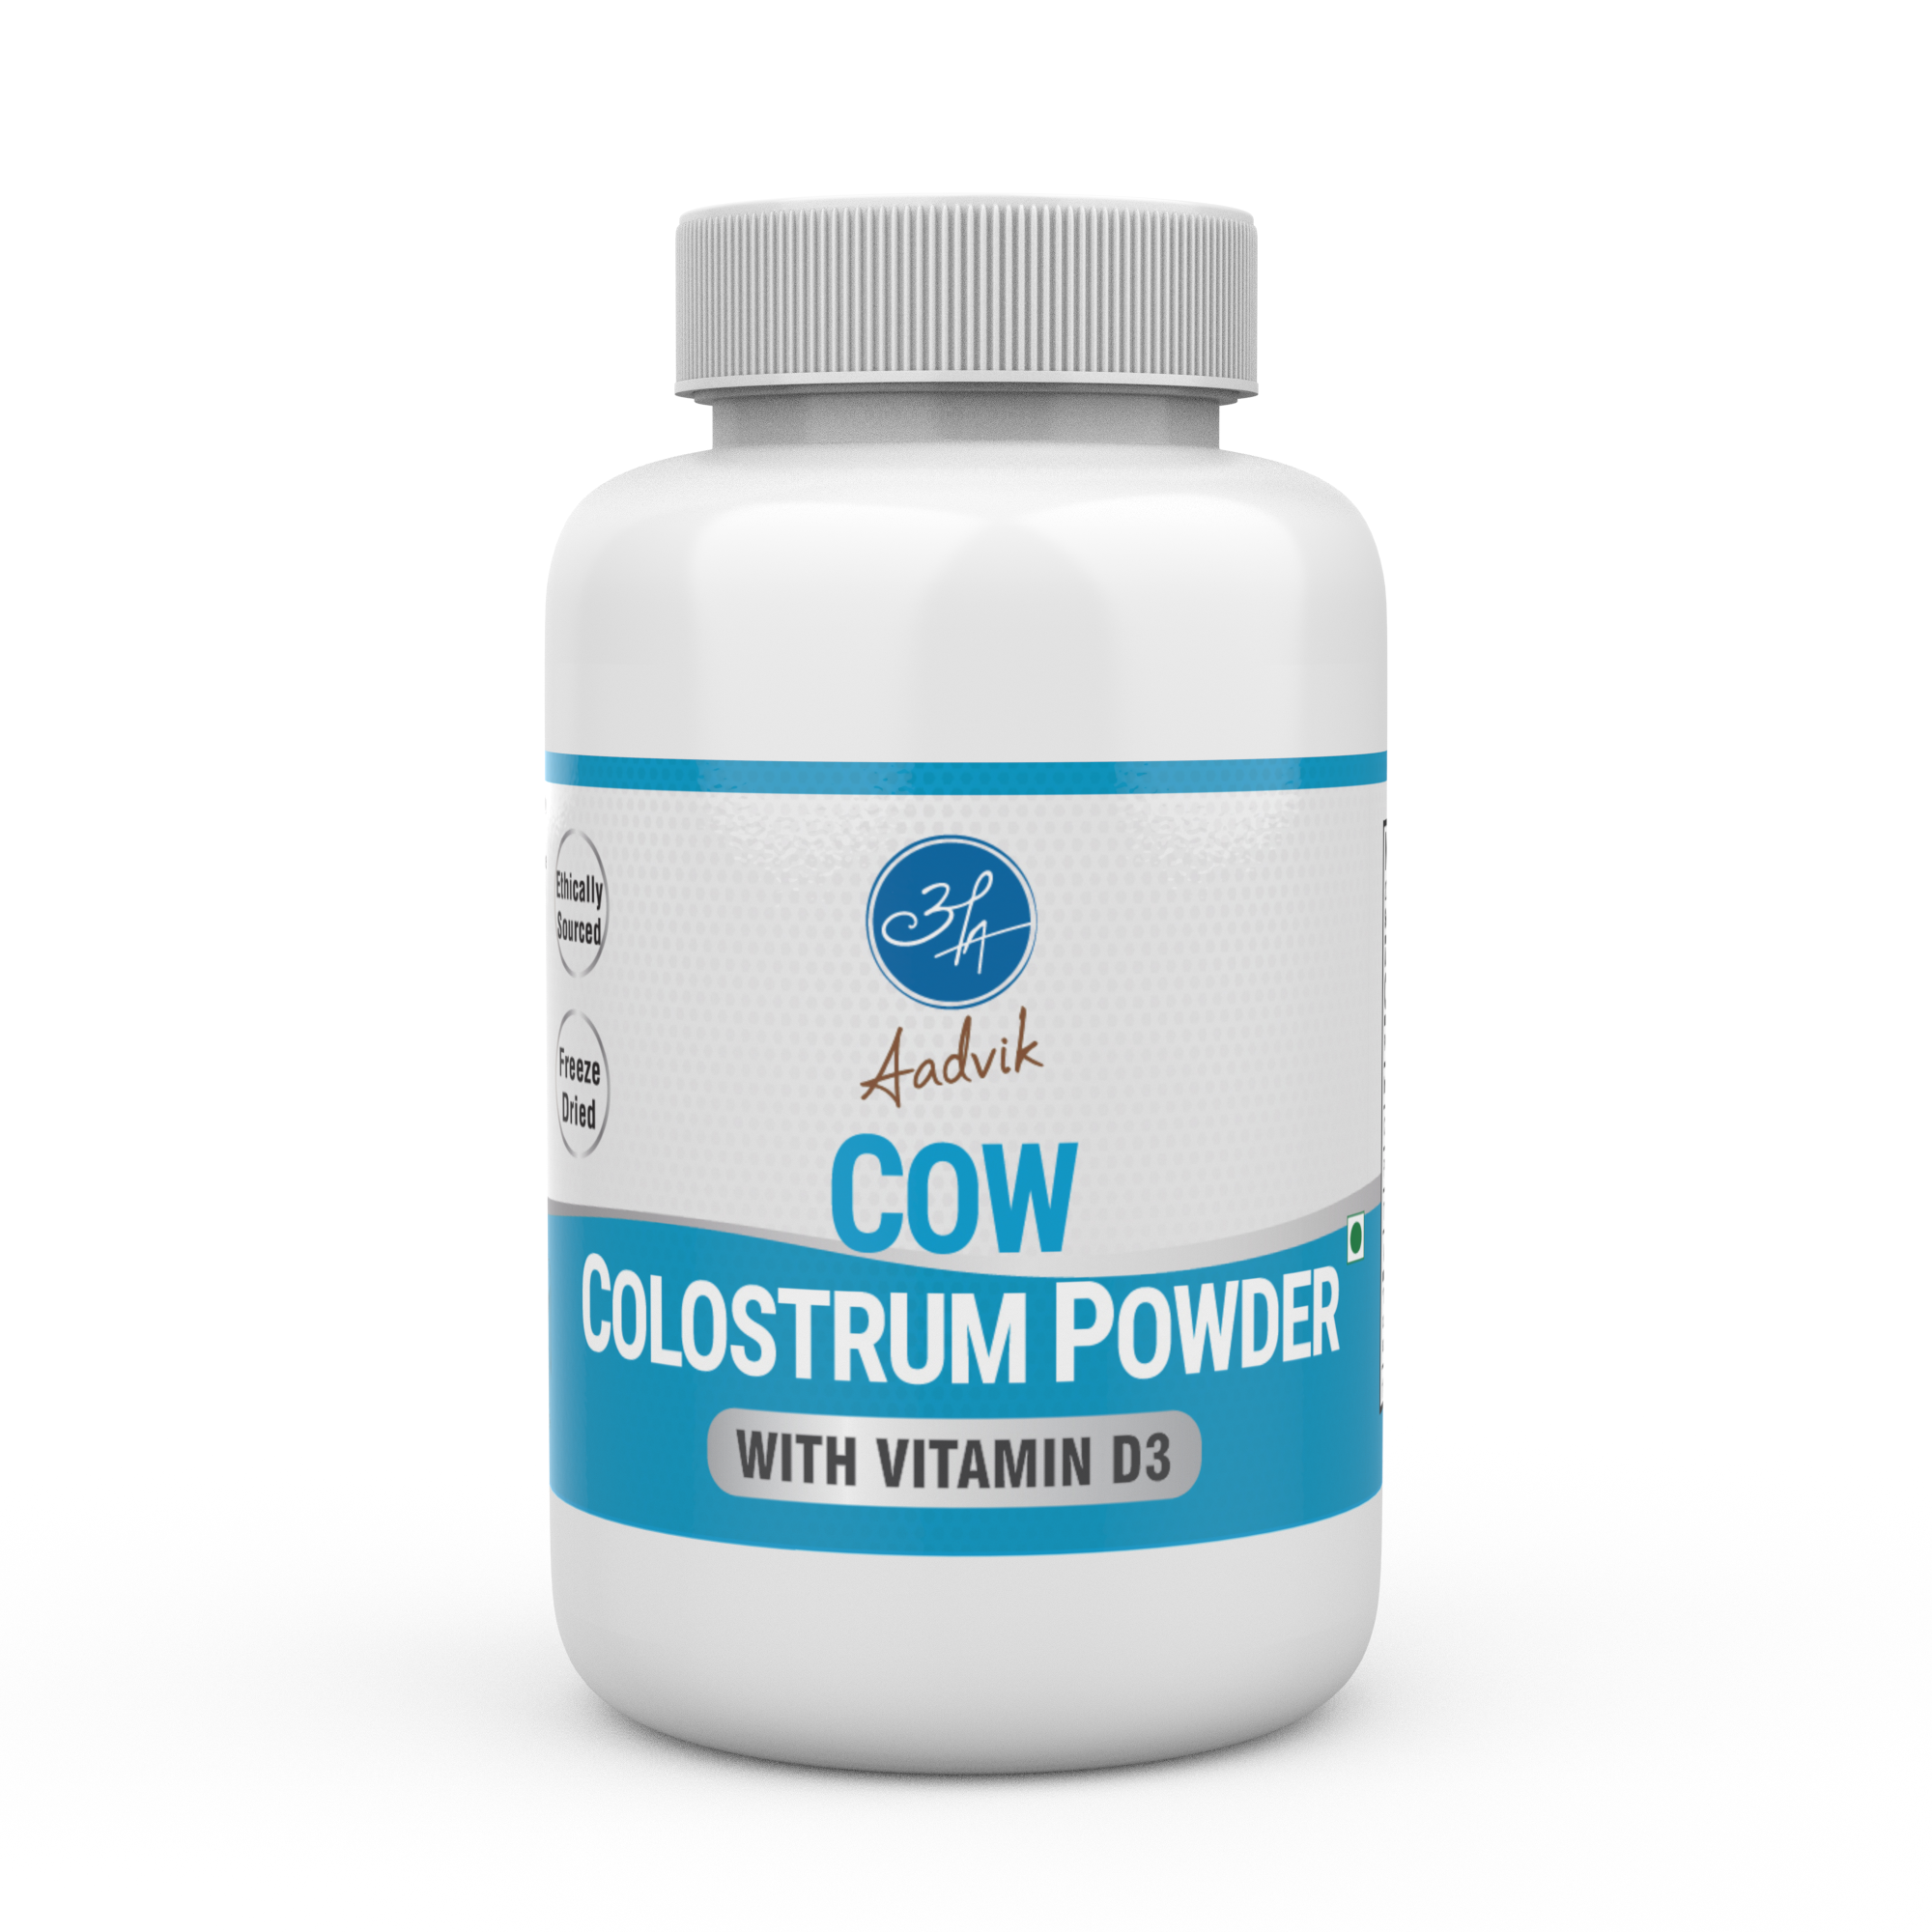 Cow Colostrum Powder now with Vitamin D3 (600 IU per serving) | 100g 3.52oz